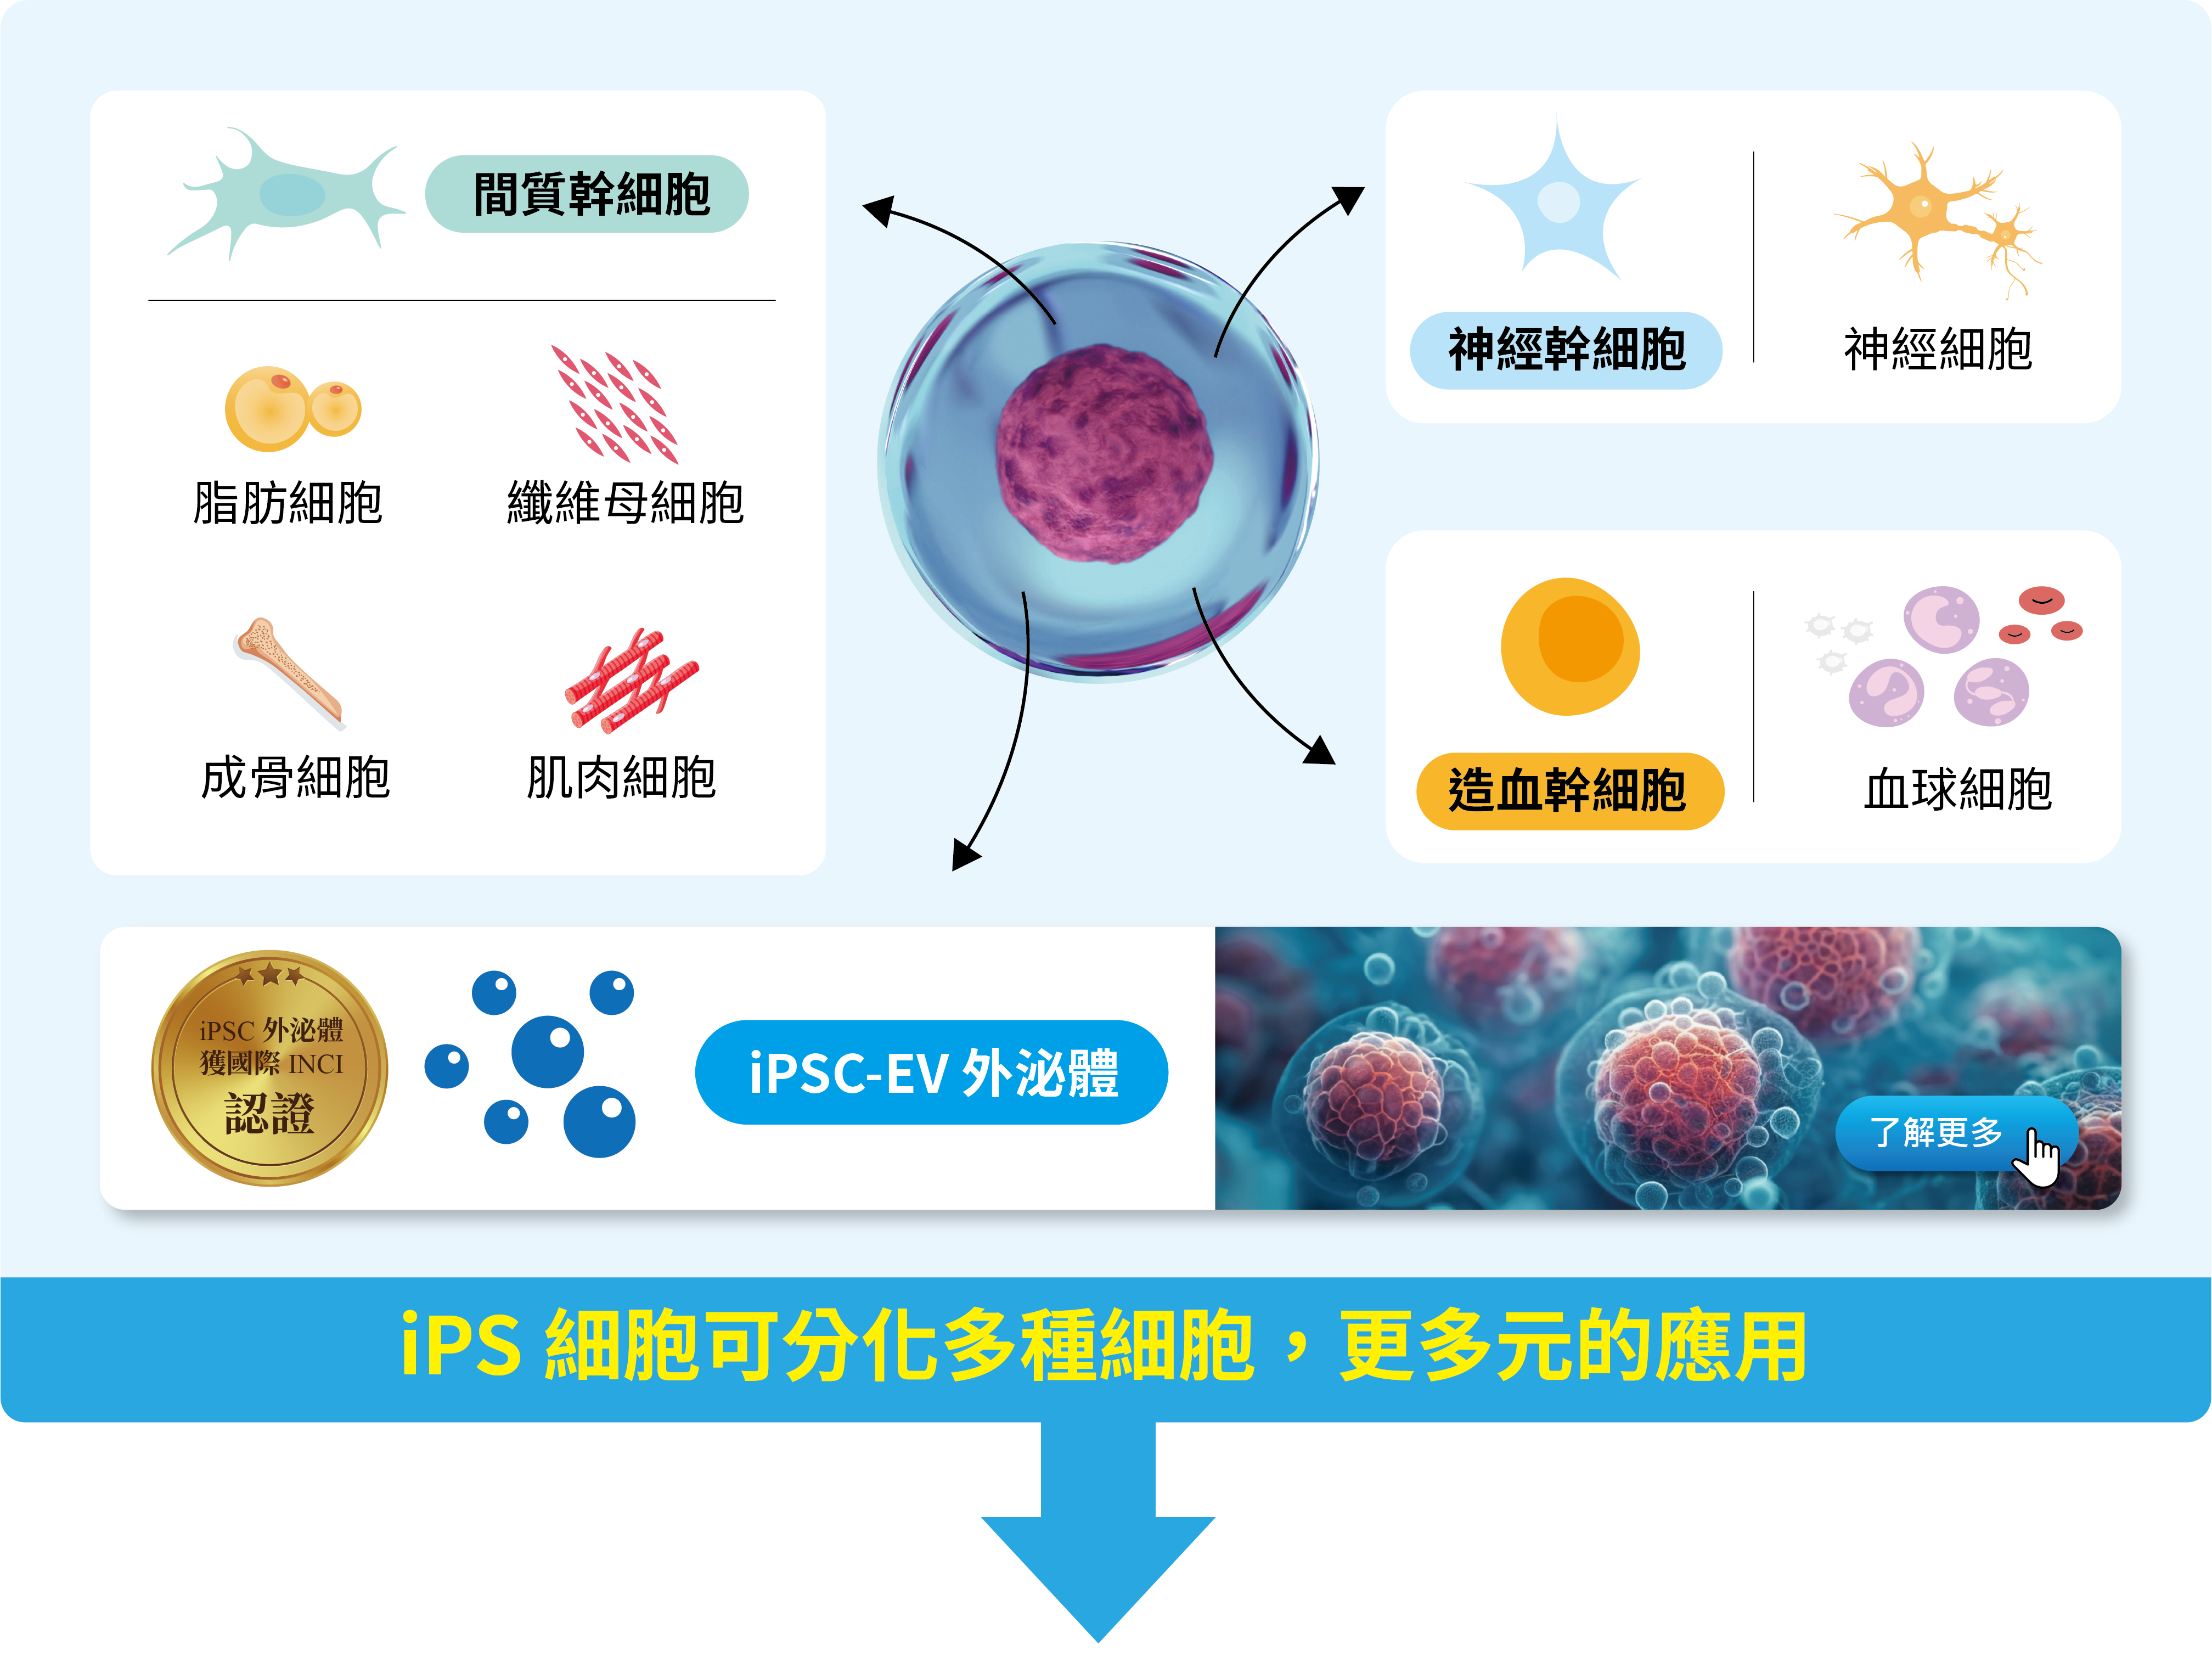 iPS細胞(iPSC)為多能型幹細胞，相較間質幹細胞，iPSC具有更多元的分化能力。且iPSC的外泌體iPSC-EV更是富含抗老化與再生因子。